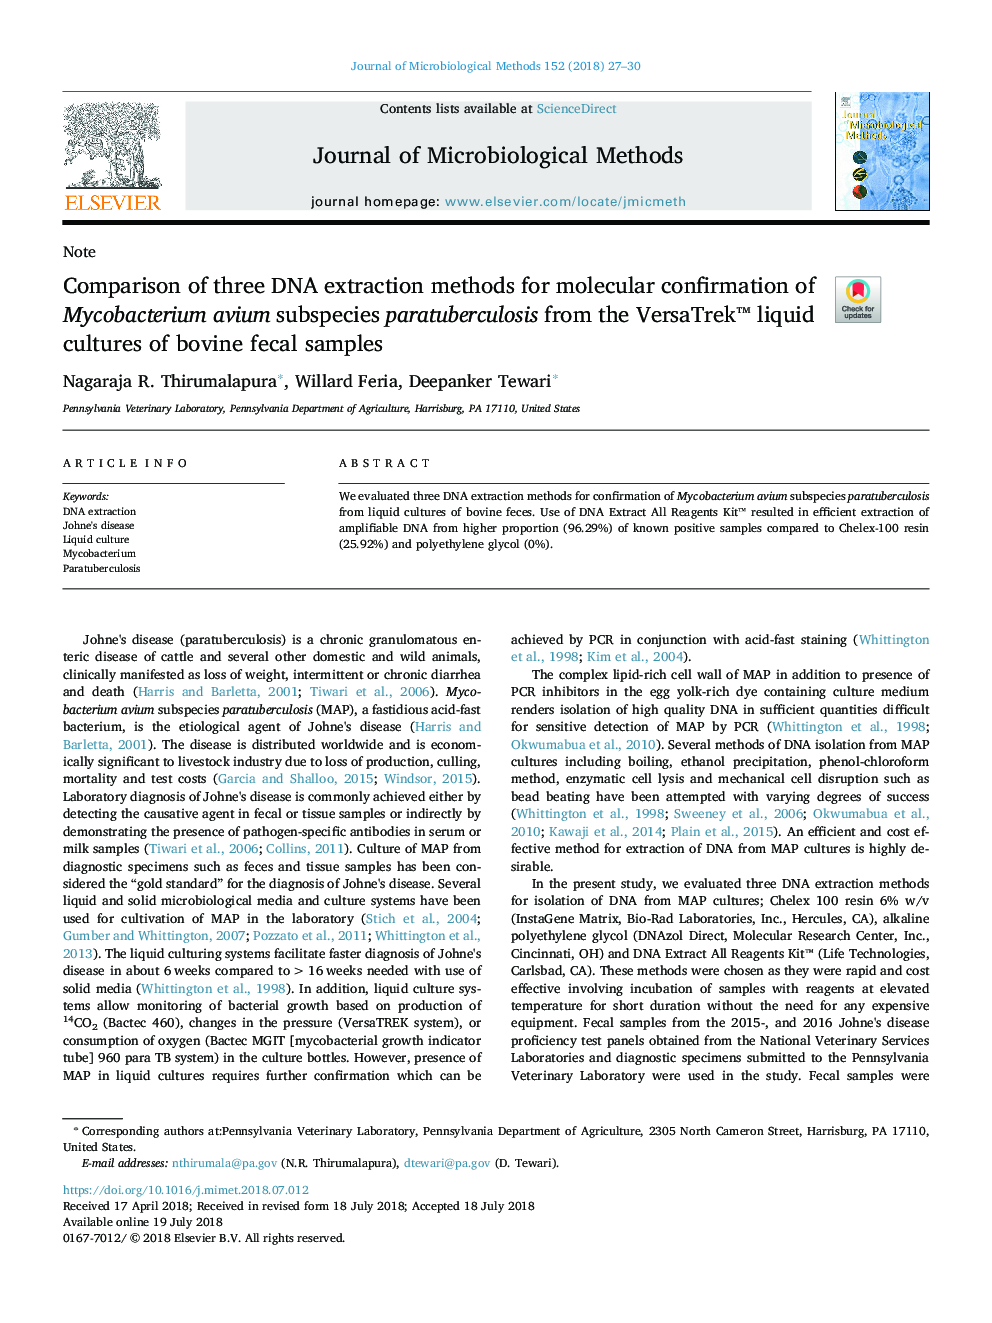 Comparison of three DNA extraction methods for molecular confirmation of Mycobacterium avium subspecies paratuberculosis from the VersaTrekâ¢ liquid cultures of bovine fecal samples